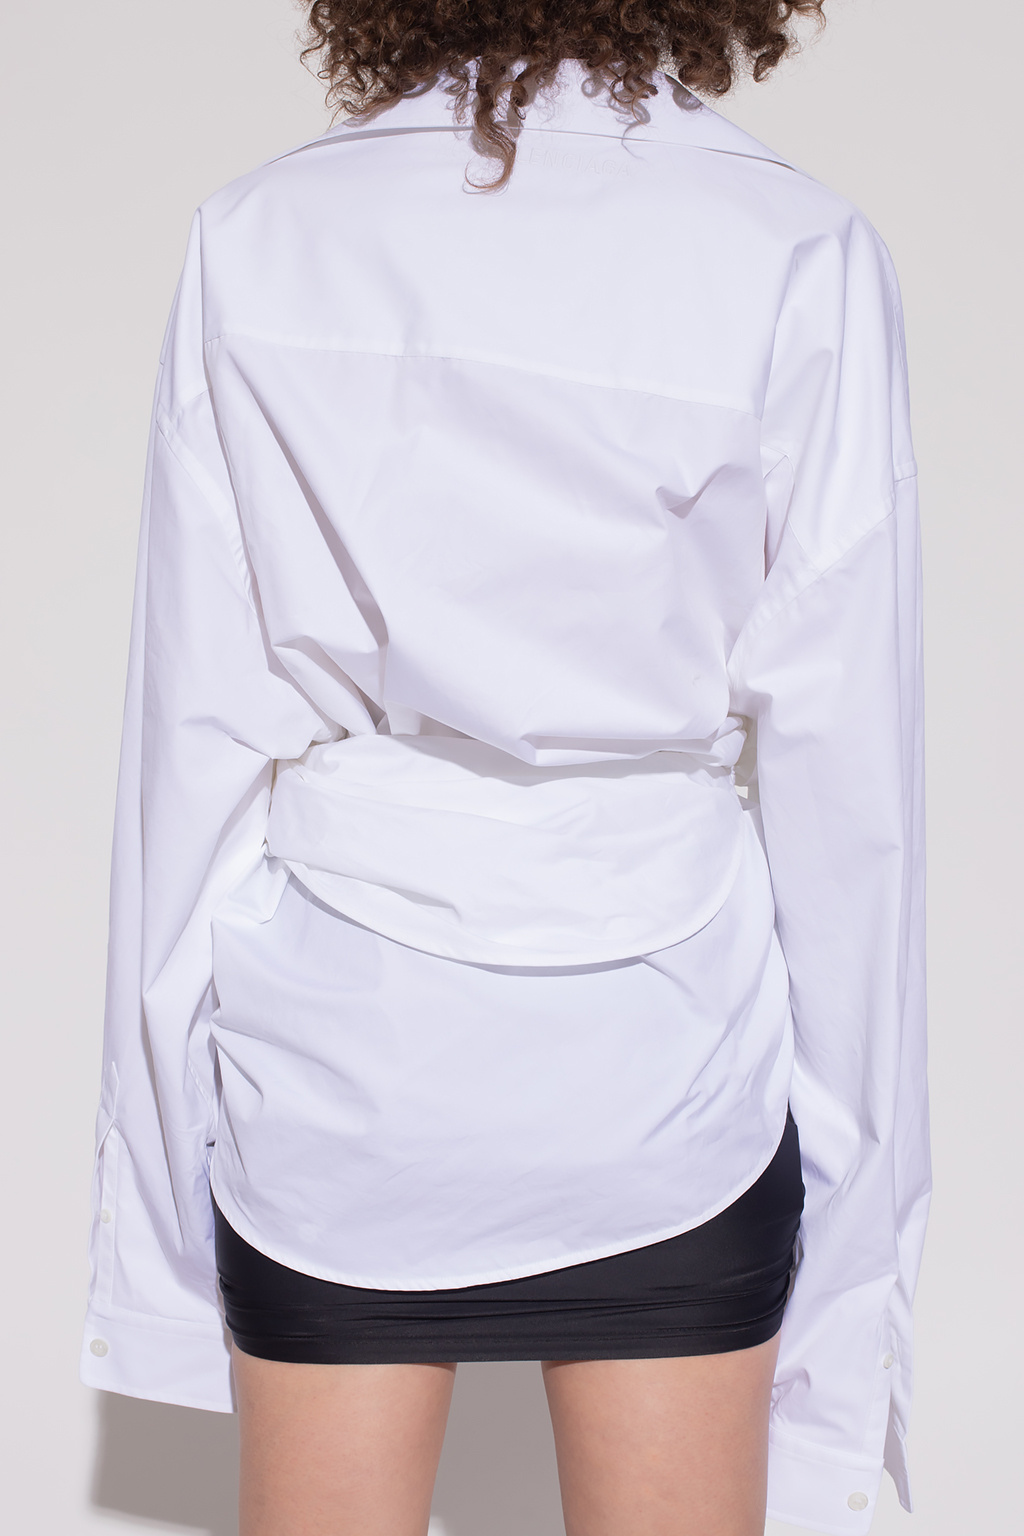 Balenciaga Relaxed-fitting Down shirt